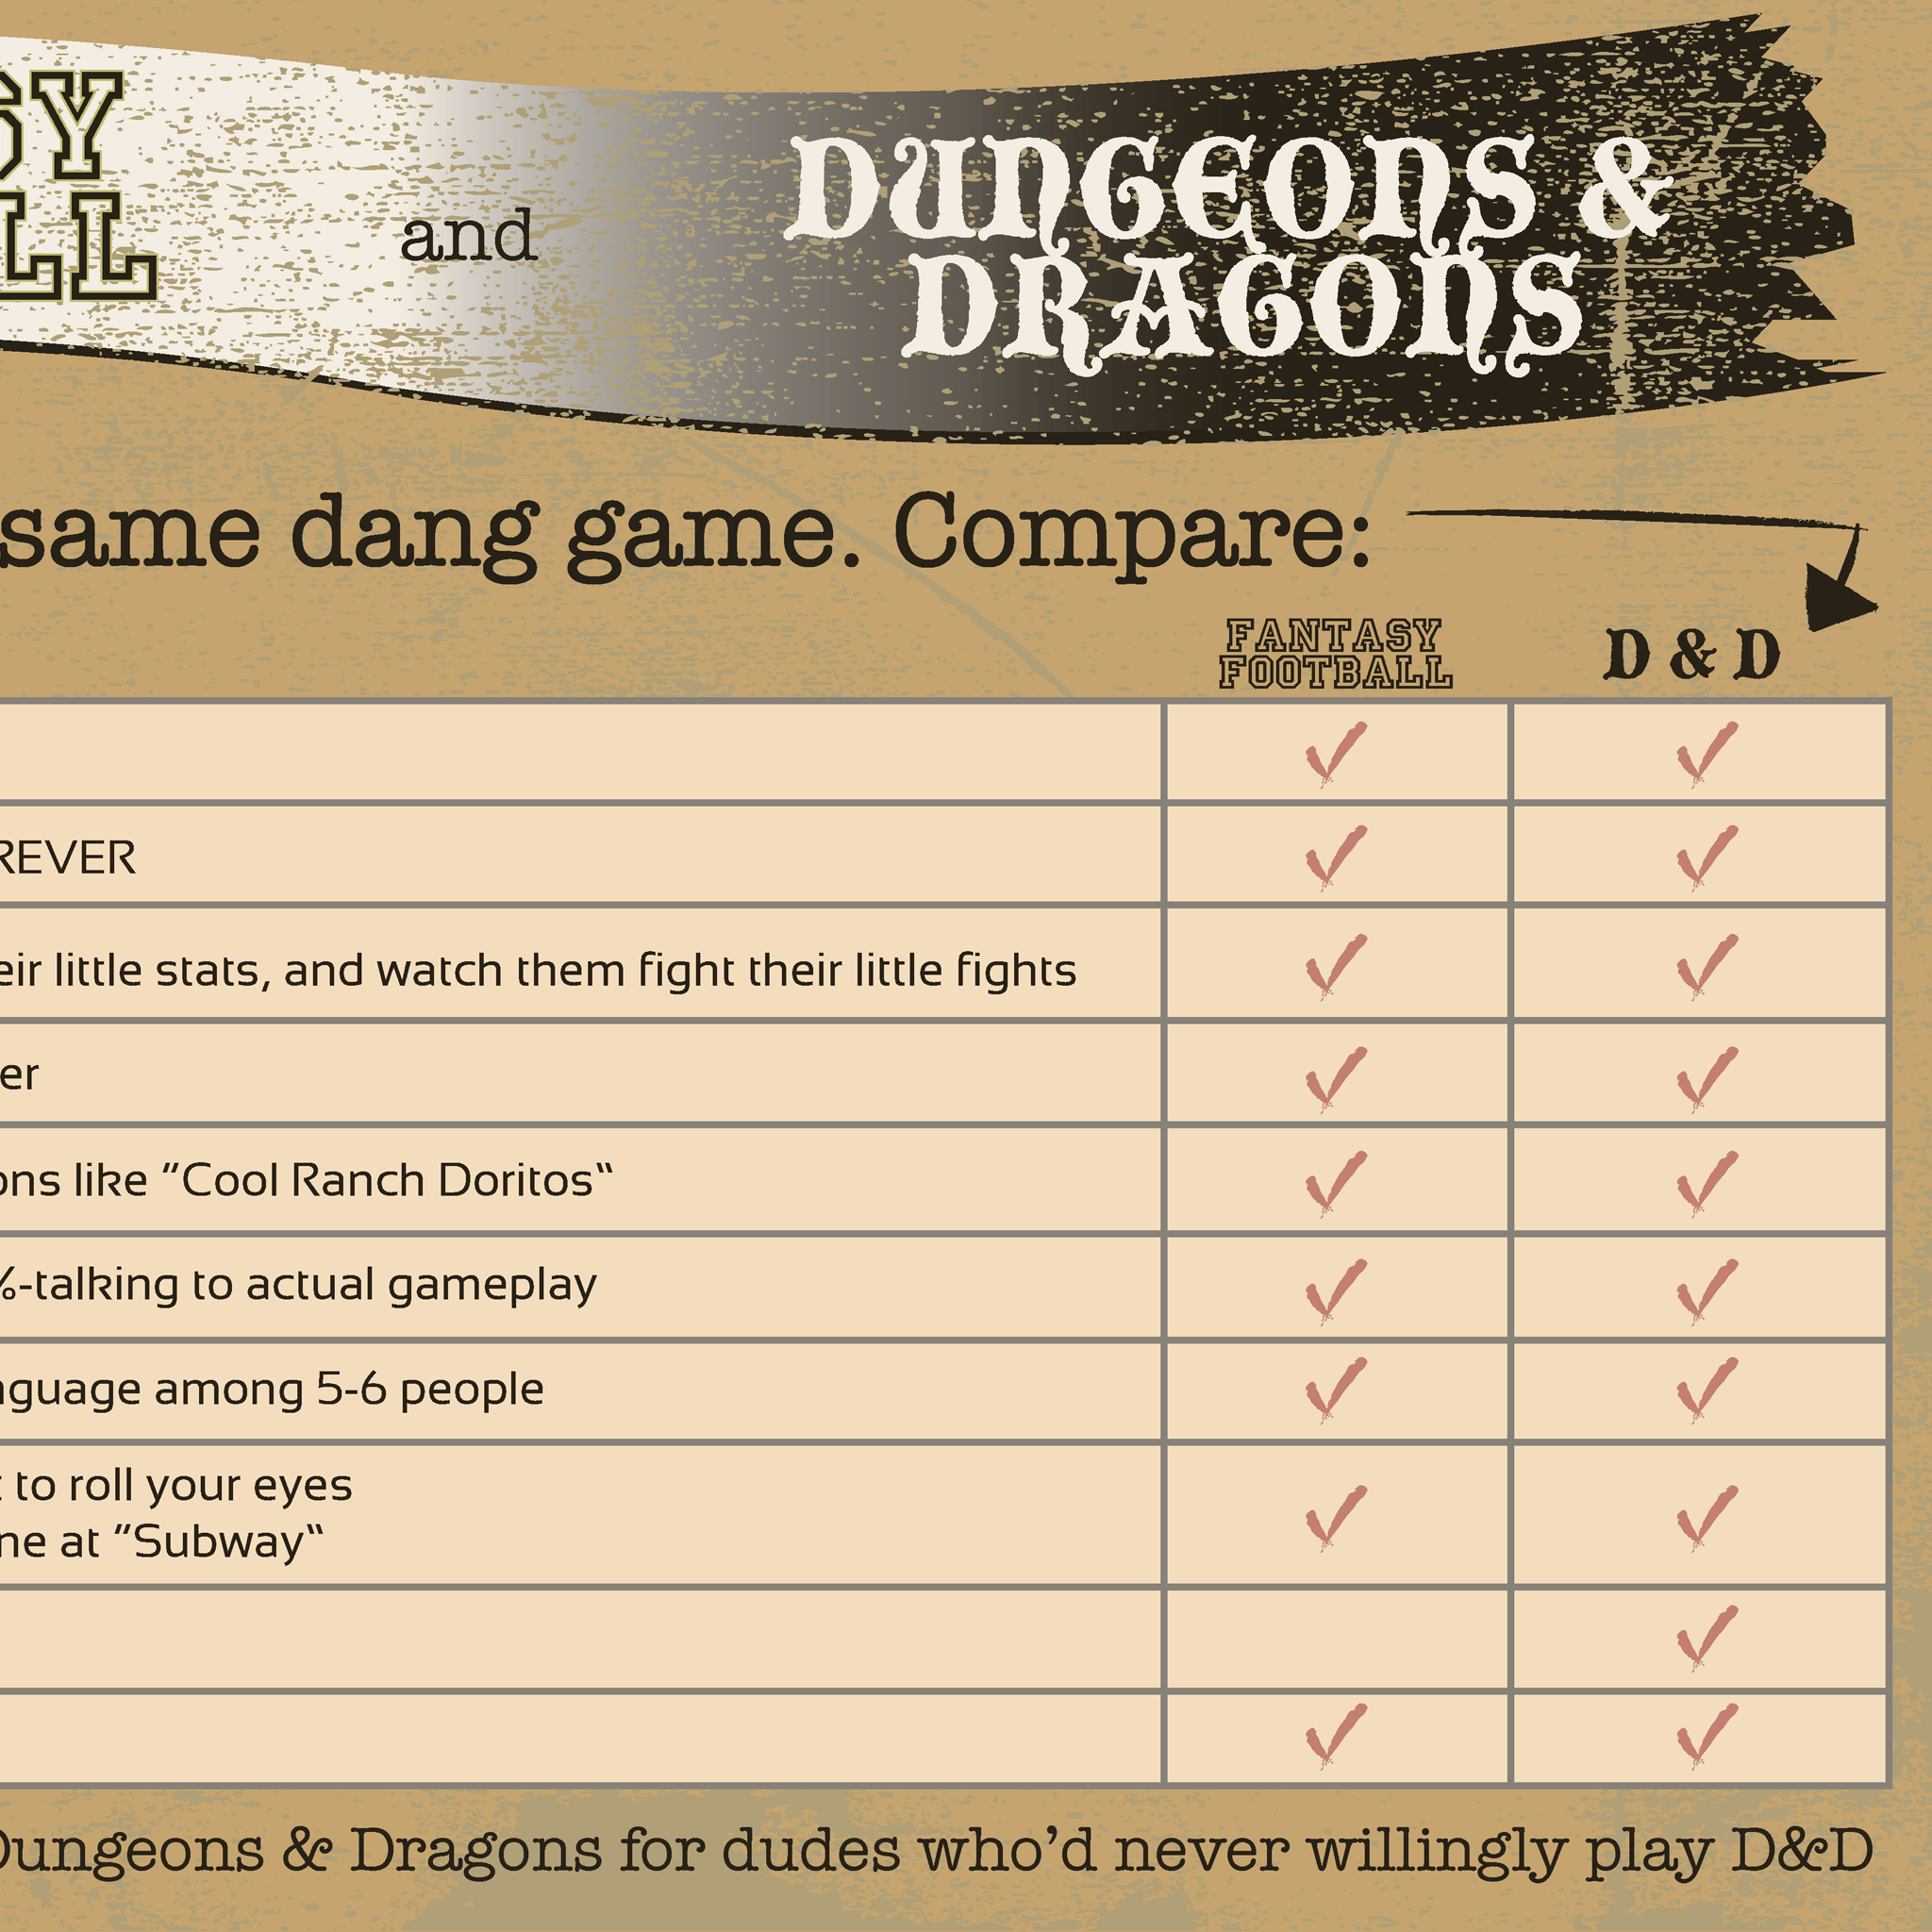 Print: Fantasy Football vs. Dungeons & Dragons